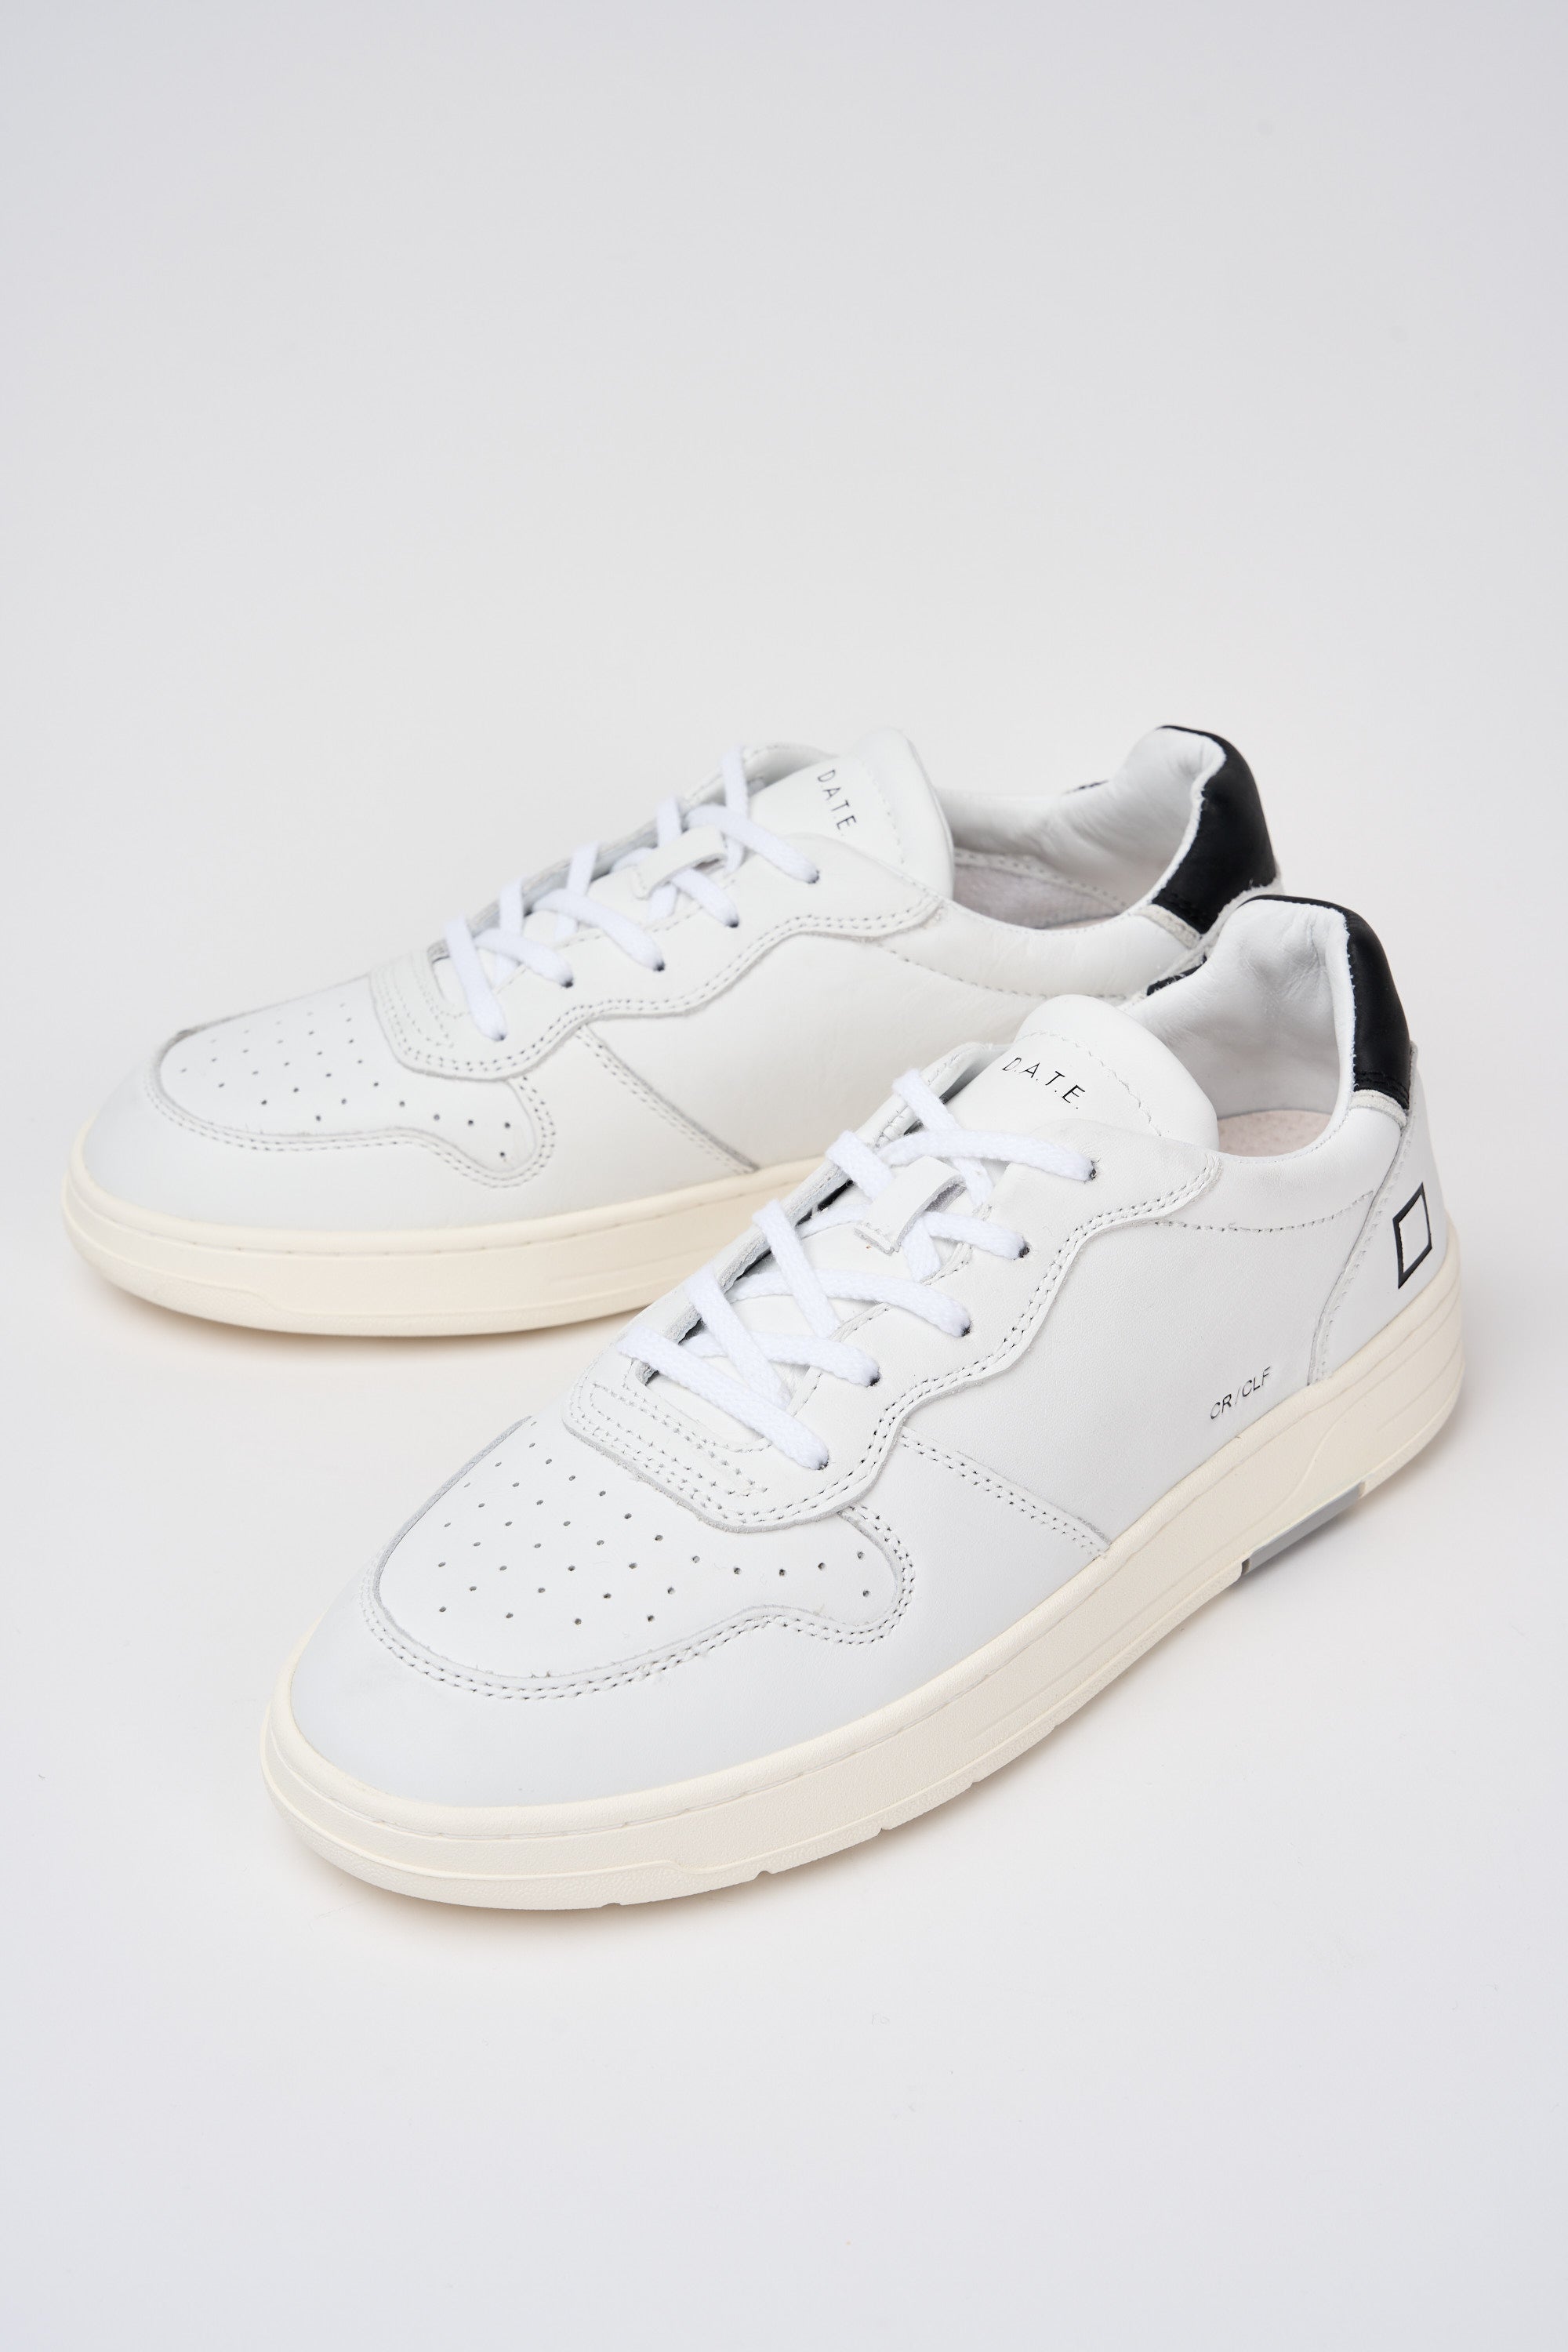 D.A.T.E. Sneaker Court Leather White/Black-7